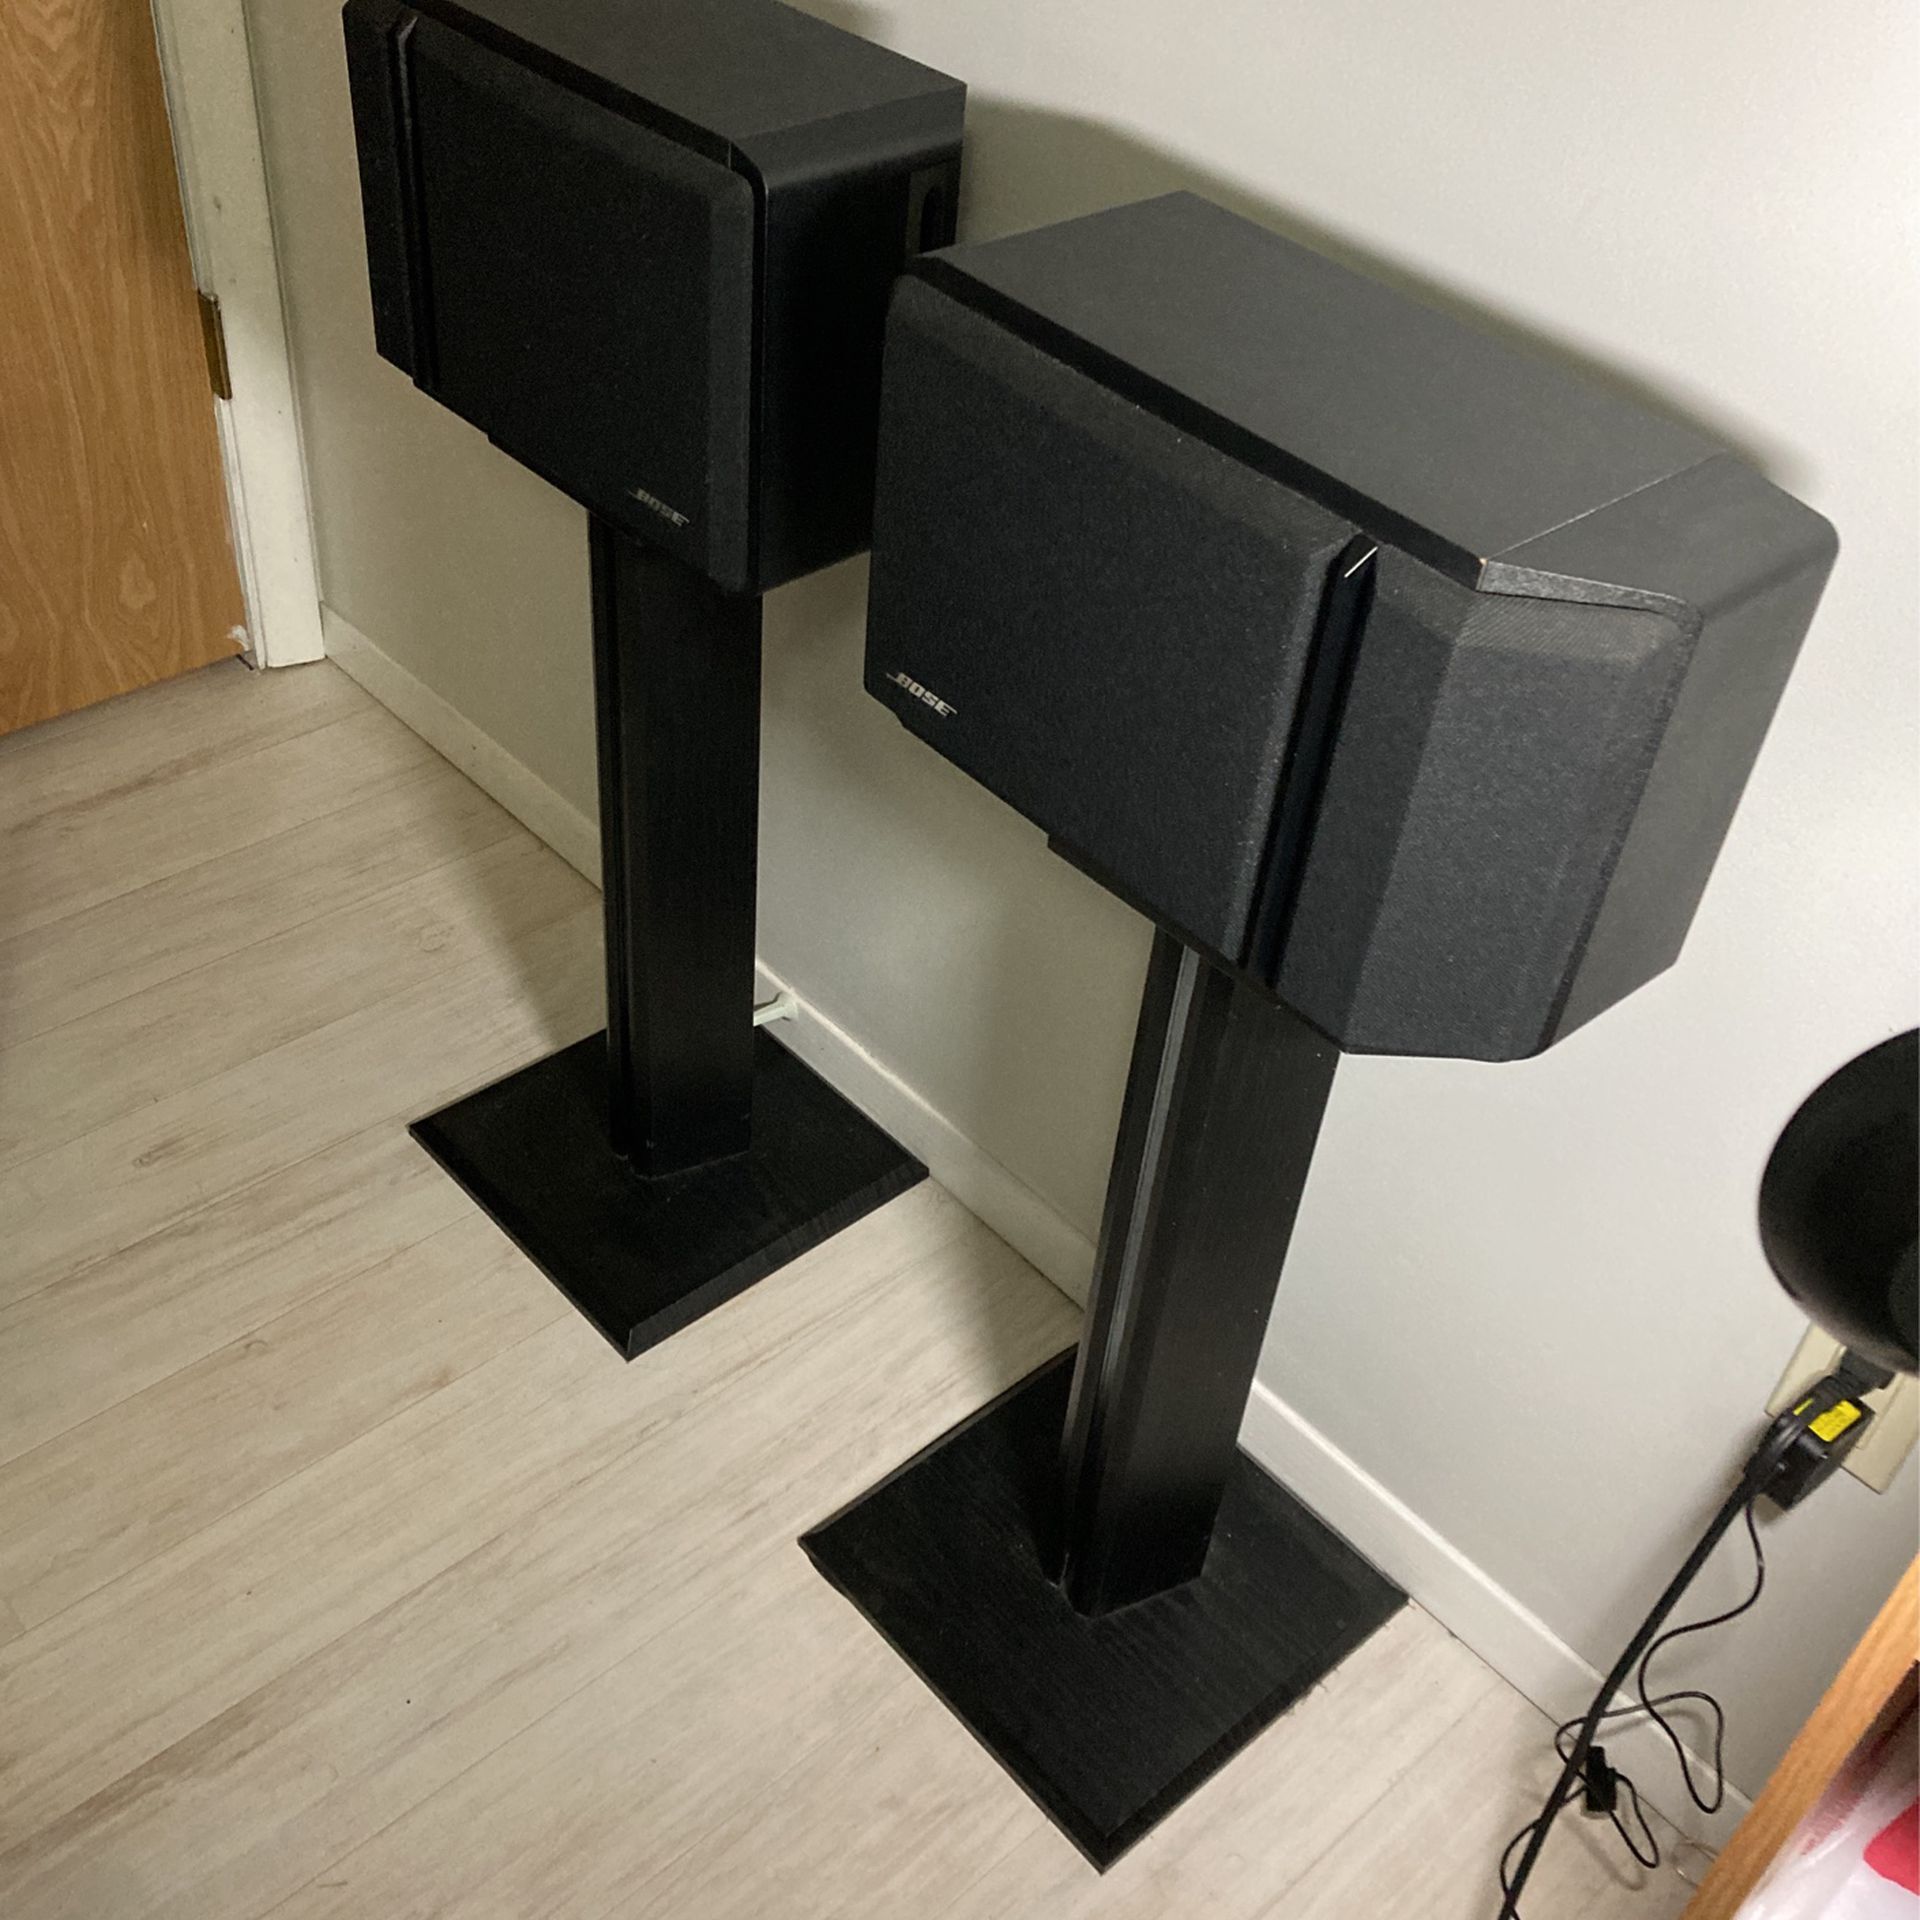 Bose Speakers On pedestals